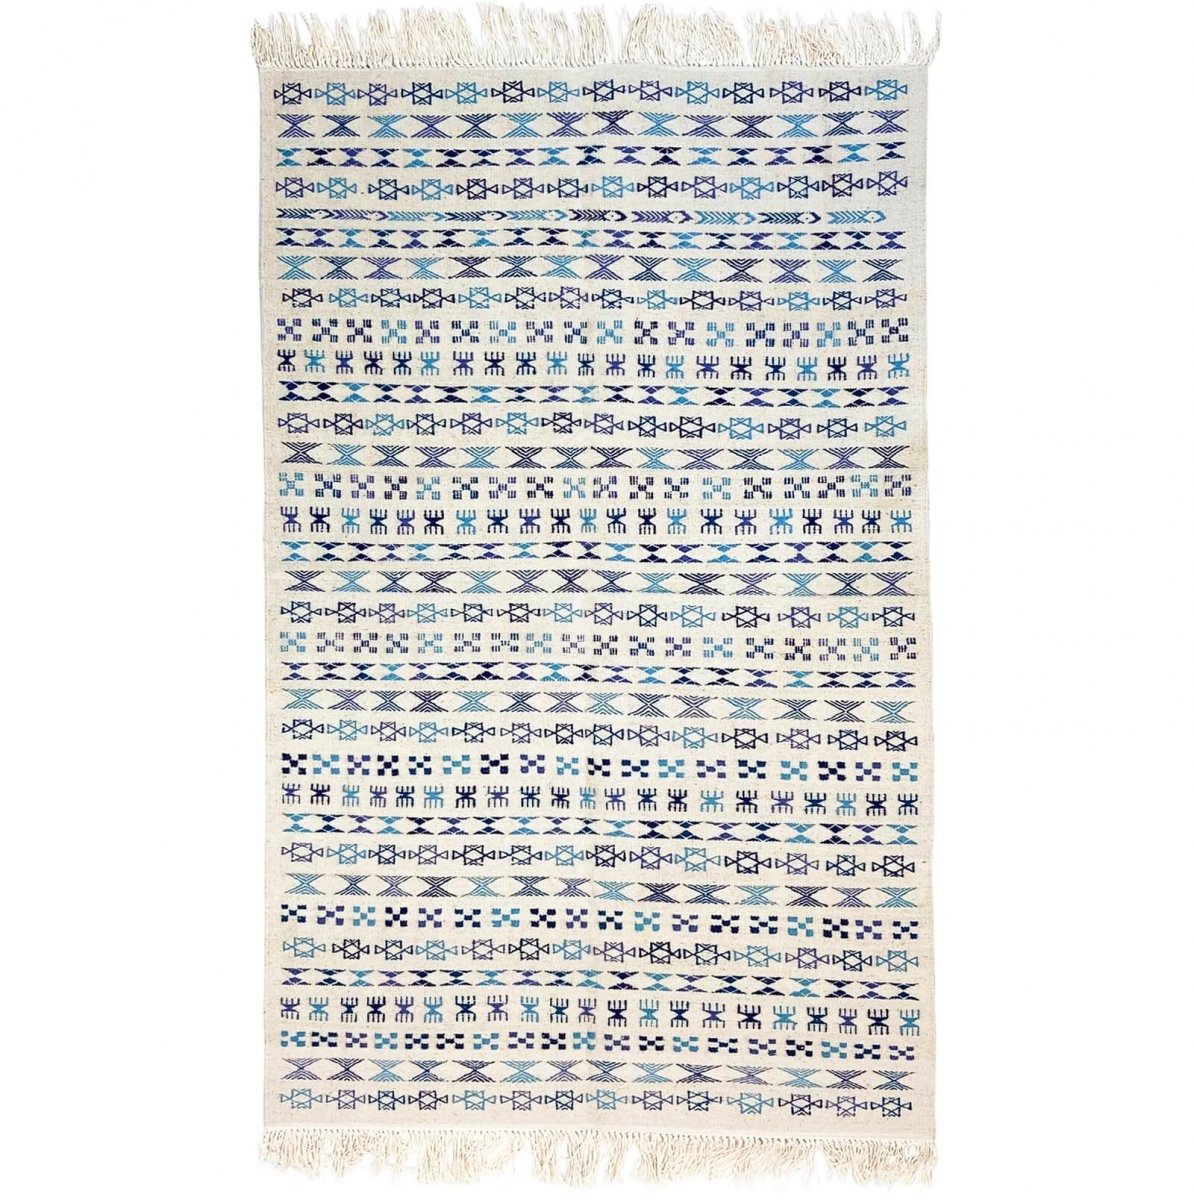 Berber carpet Rug Kilim 135x205 cm White Blue | Handmade, Wool, Tunisia Tunisian Rug Kilim style Moroccan rug. Rectangular carpe